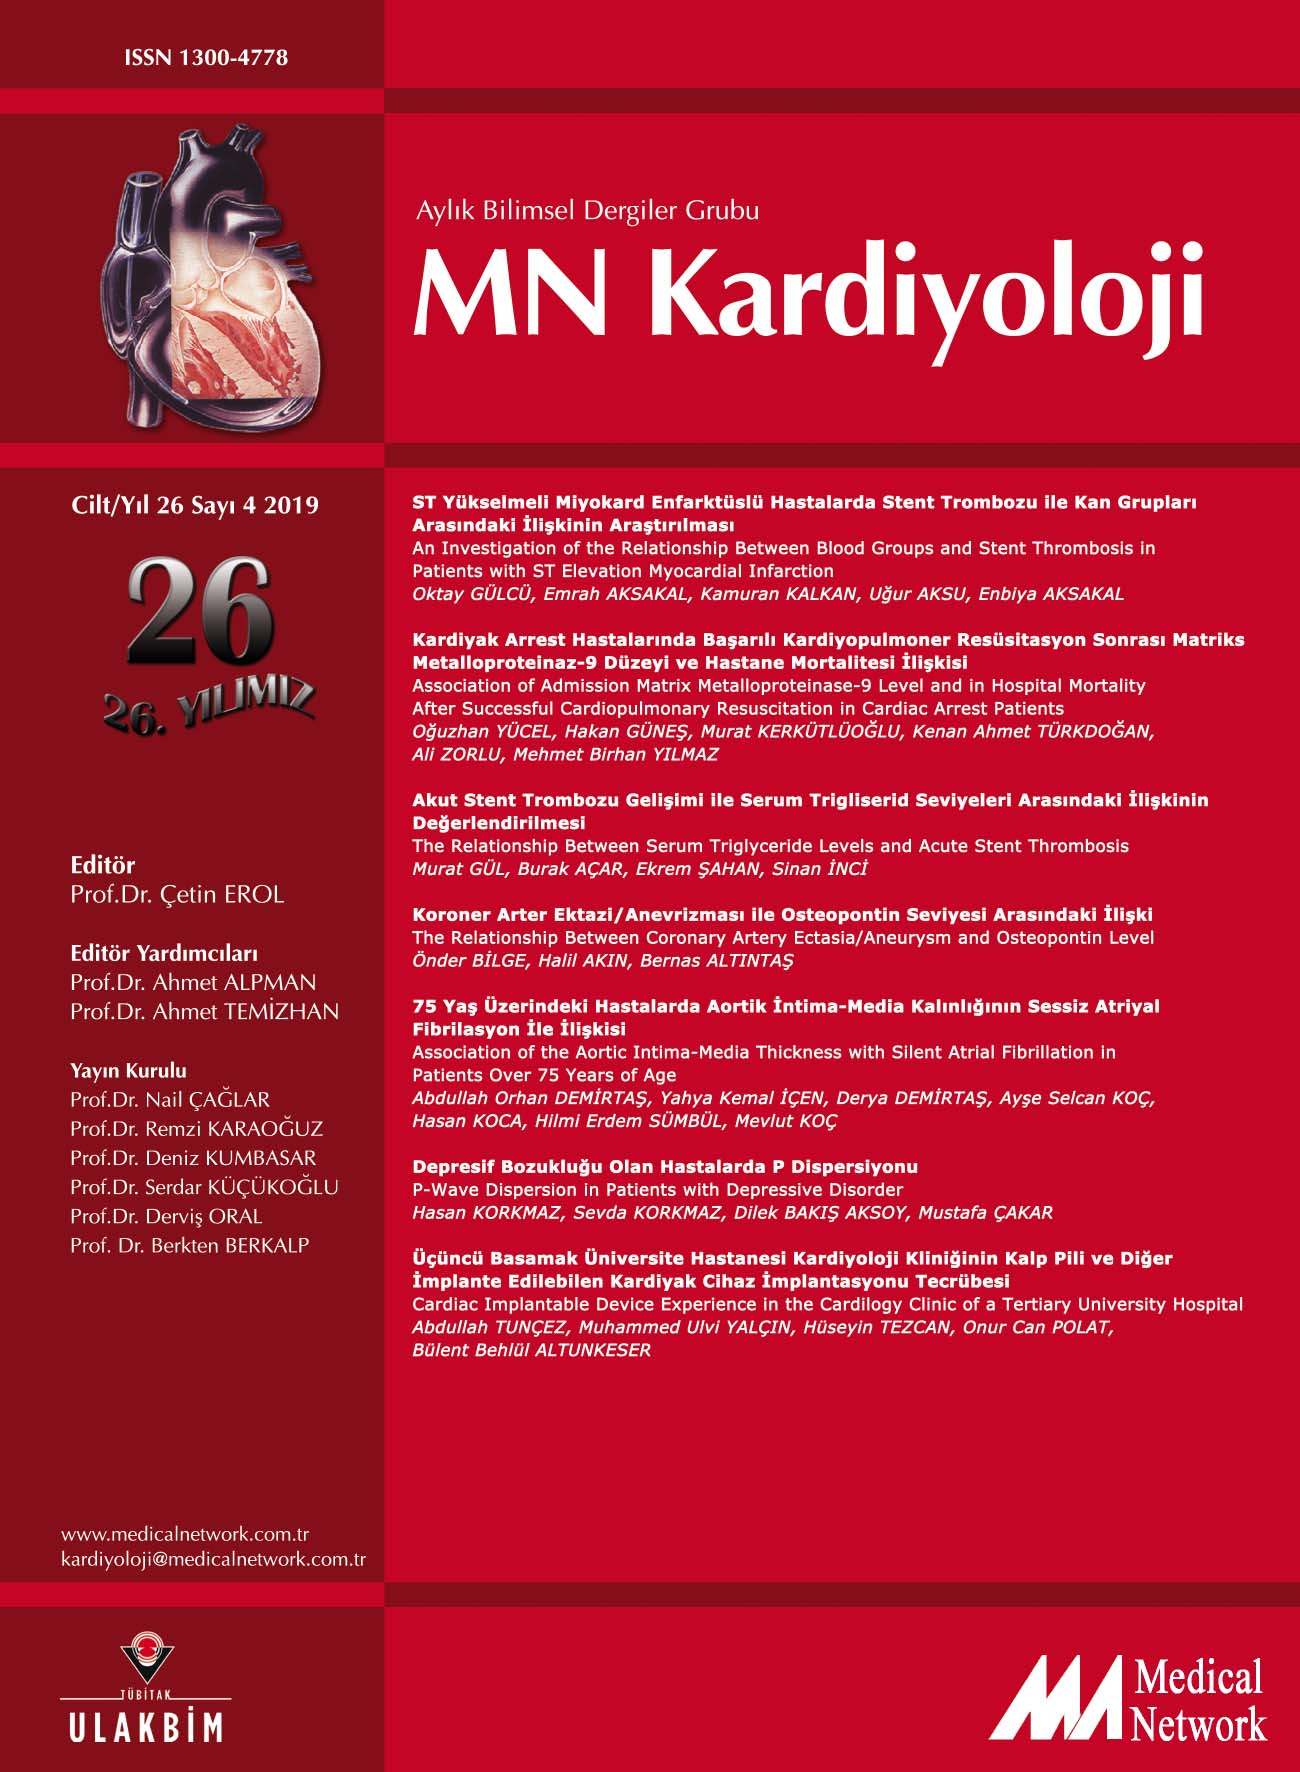 <p>MN Kardiyoloji Cilt: 26 Say: 4 2019 MN Cardiology Volume: 26 No: 4 2019</p>